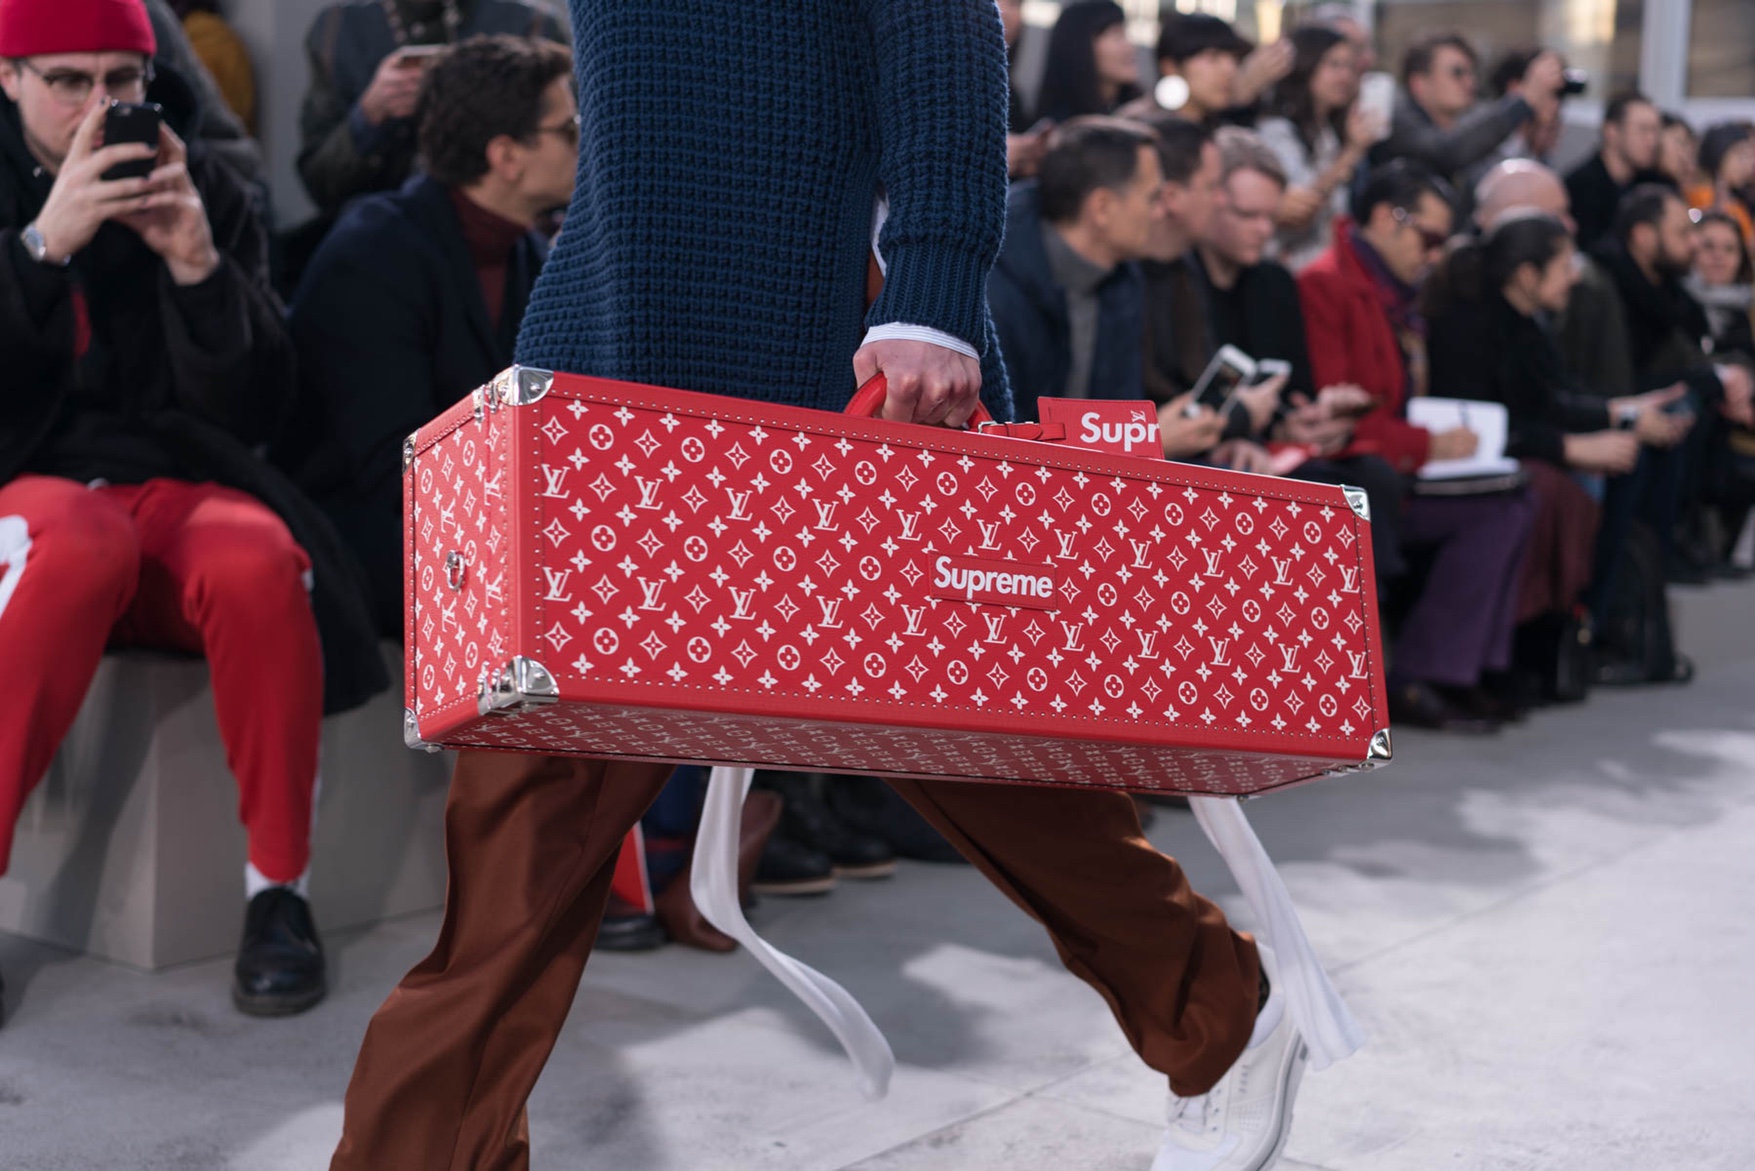 New York Denies Supreme x Louis Vuitton Pop-Up – PAUSE Online